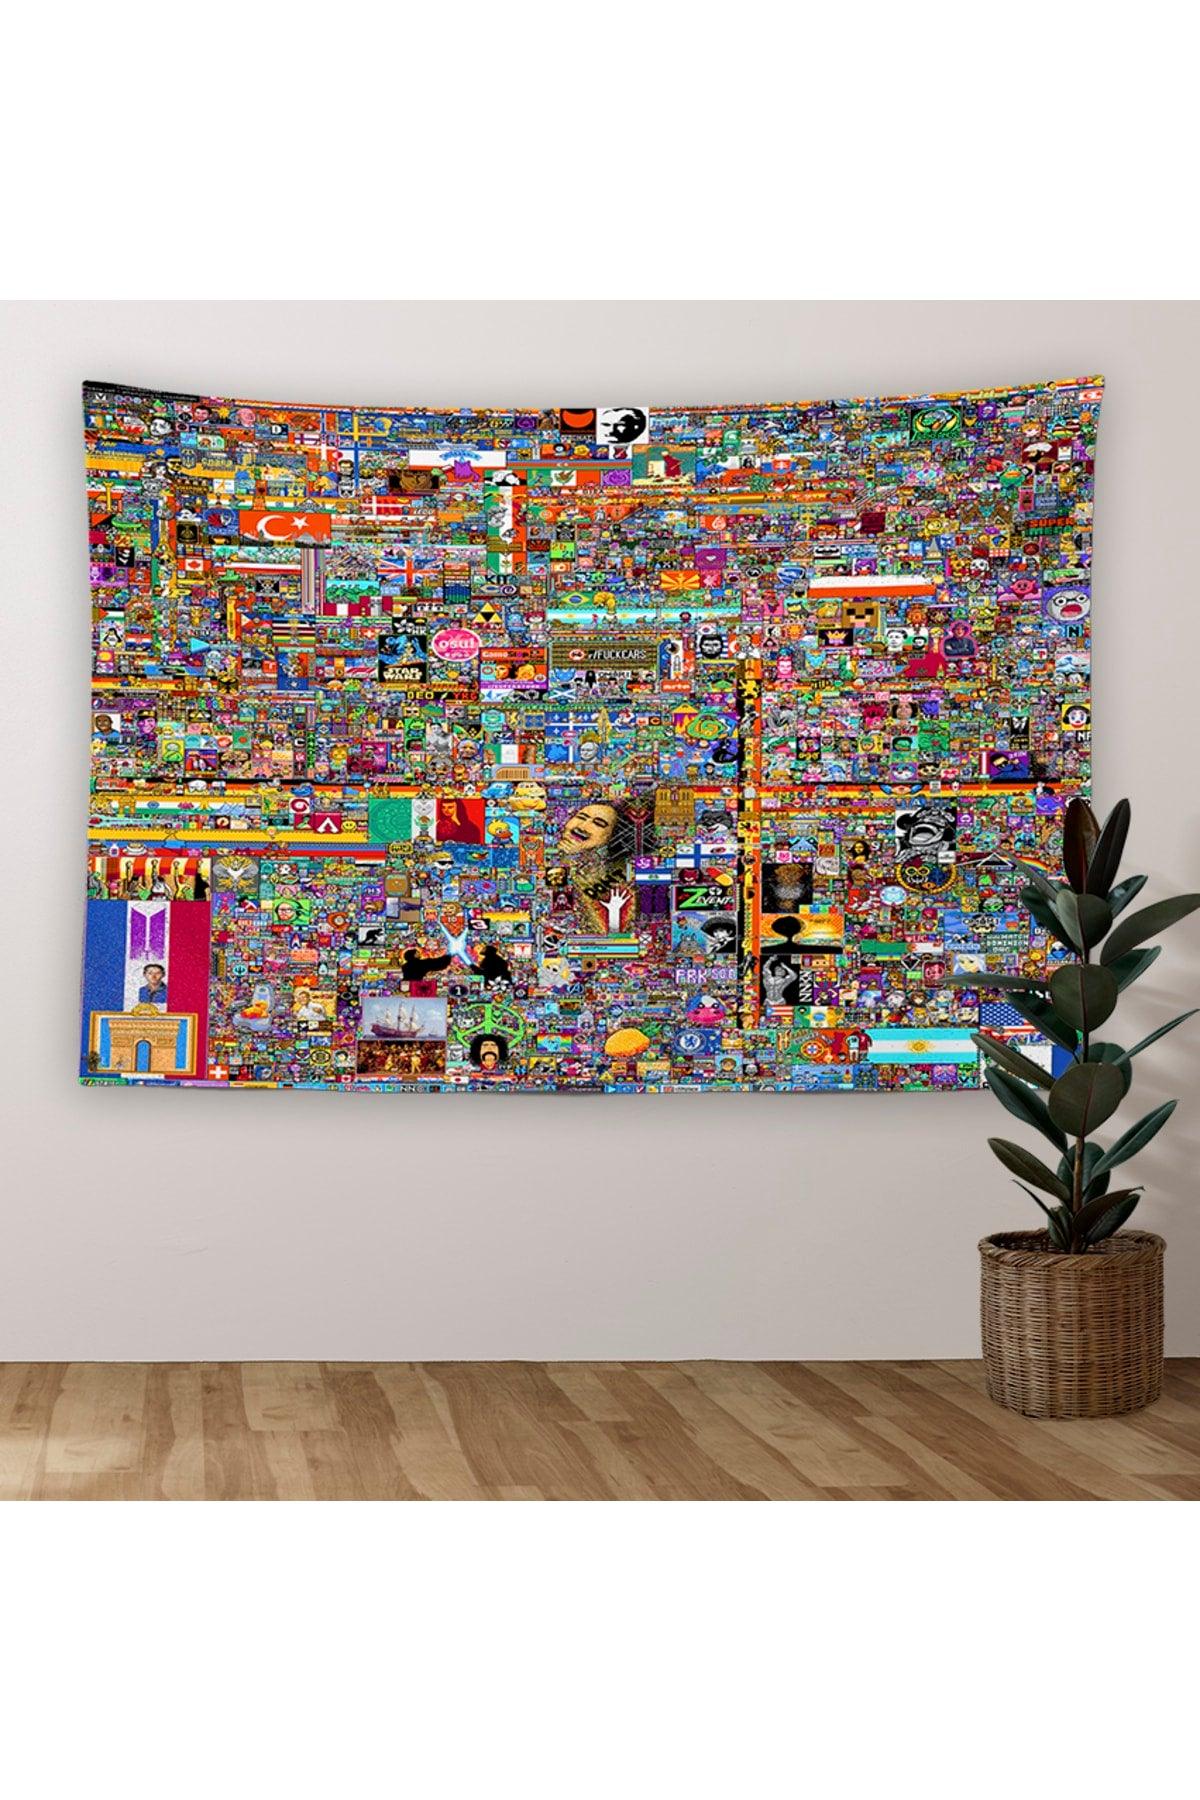 Reddit R/place Pixel Art Wall Cover - Swordslife